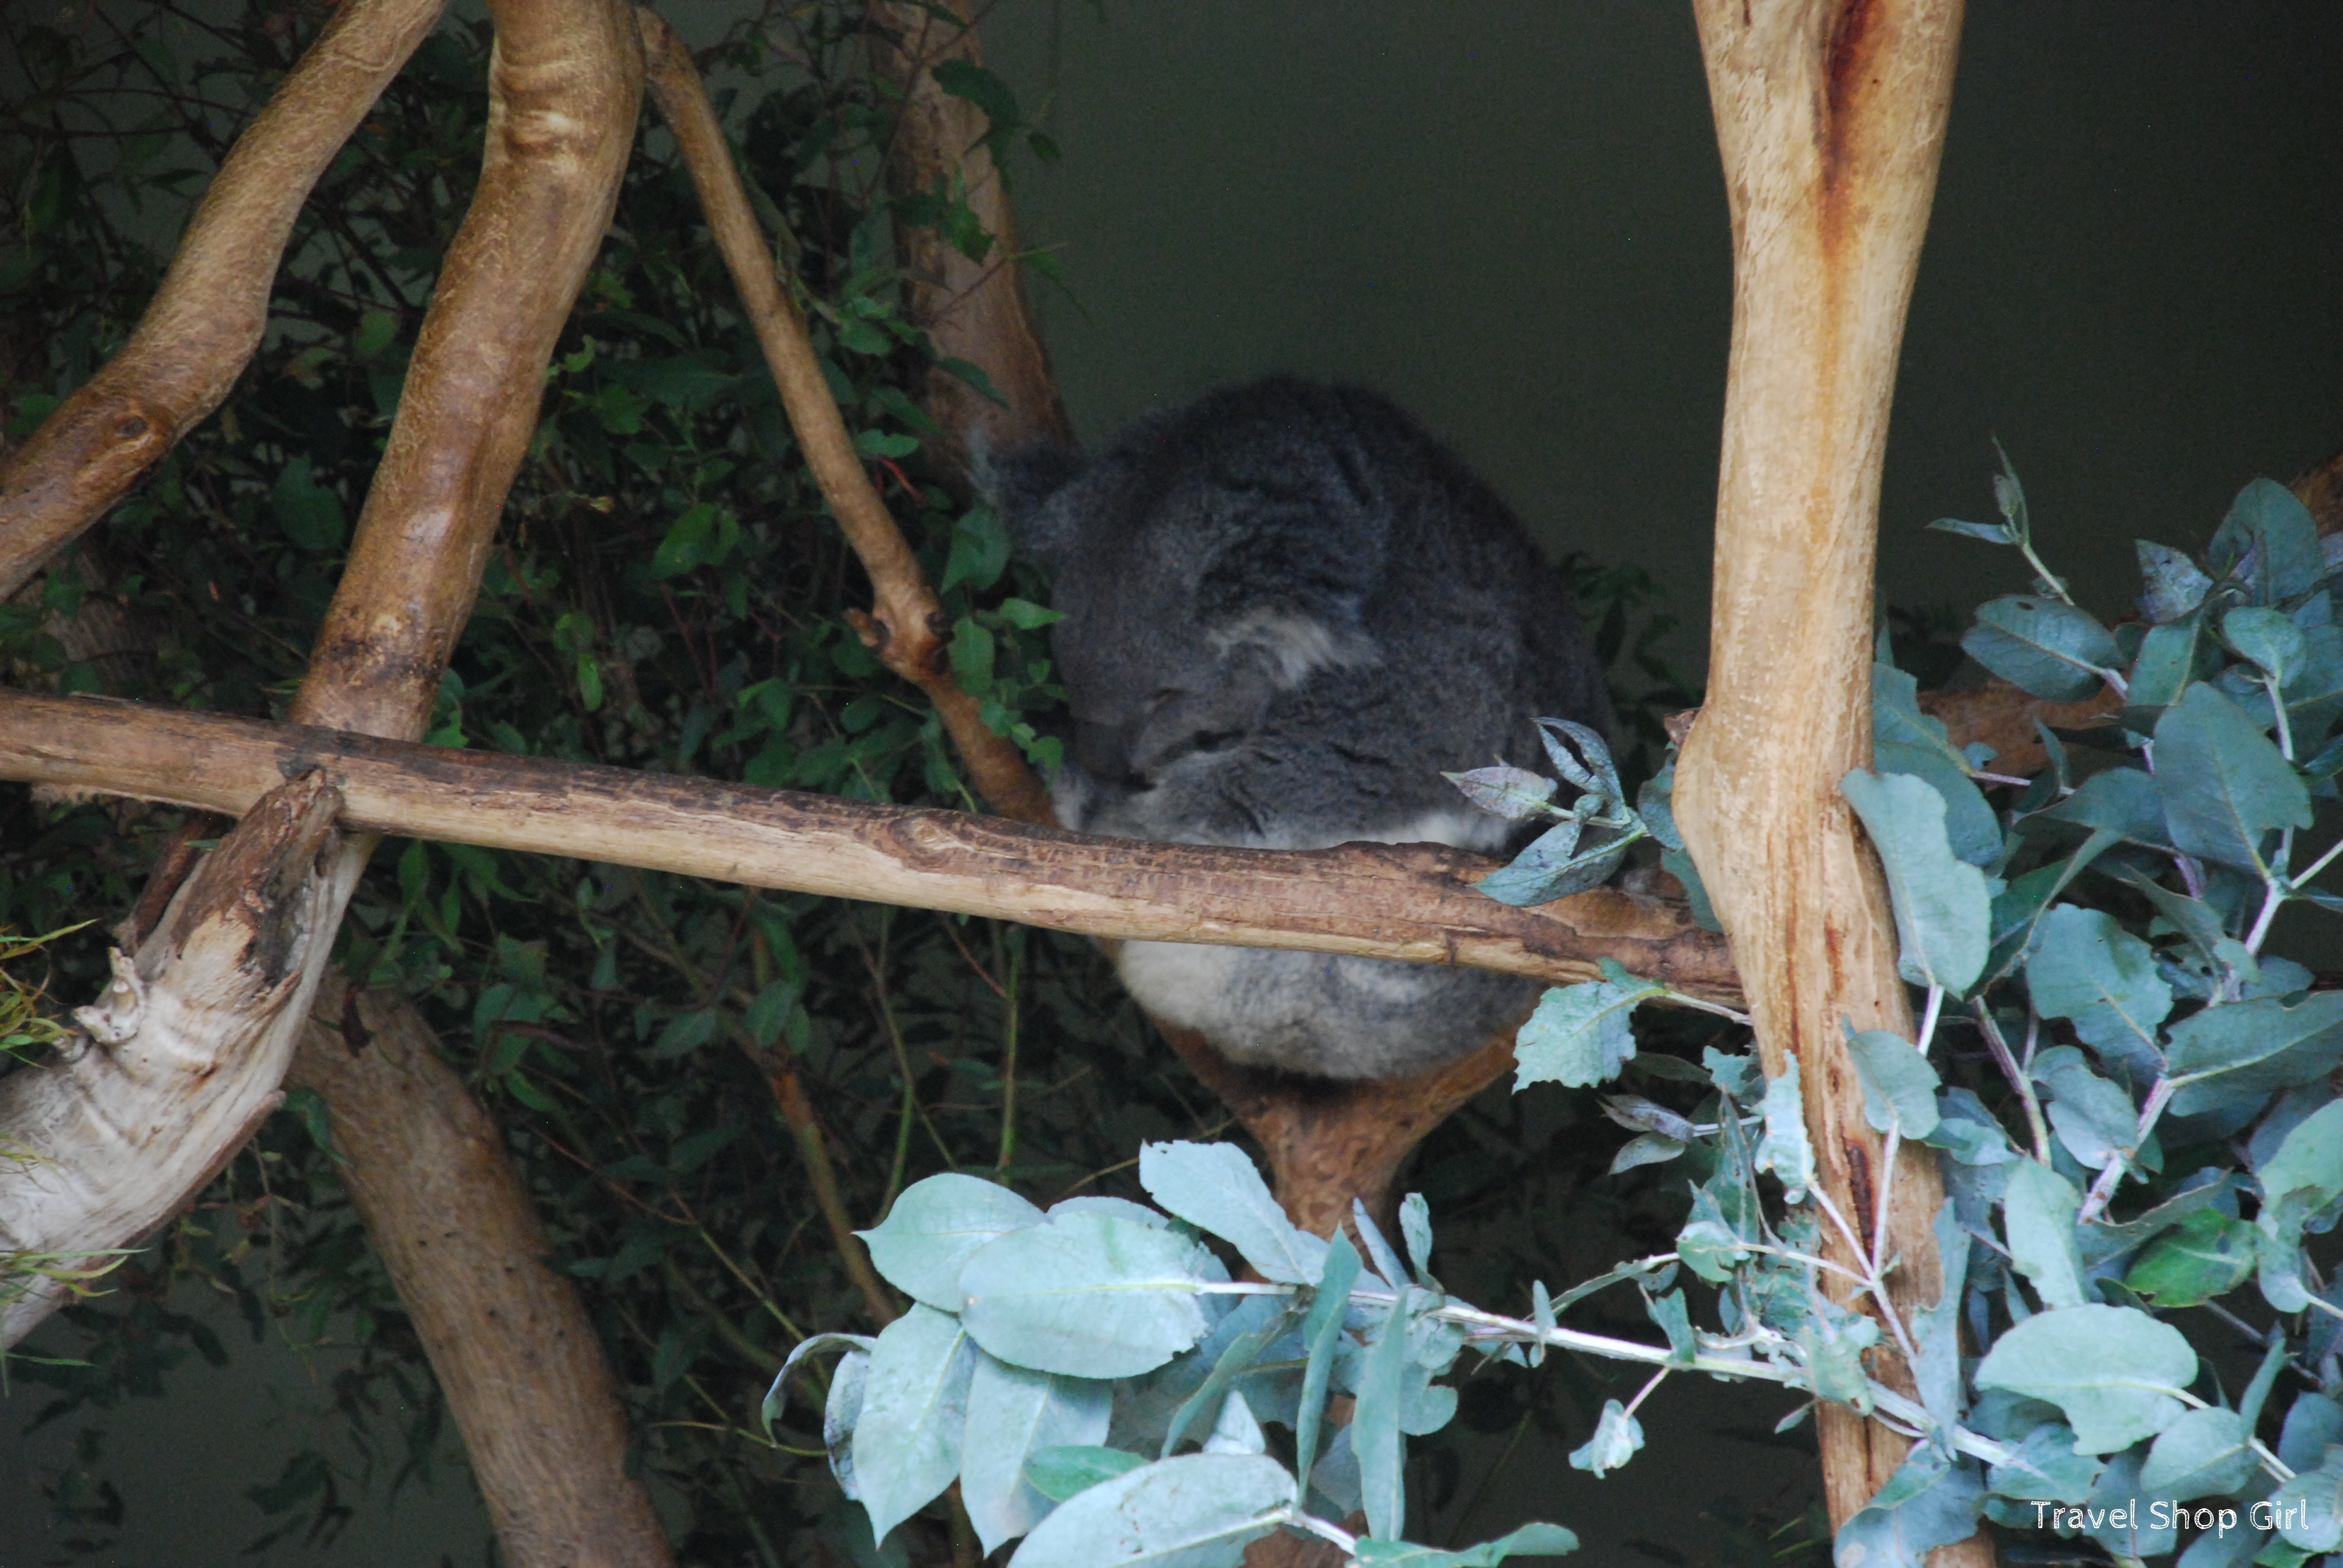 Kangaroos and Koalas at Bonorong Wildlife Sanctuary